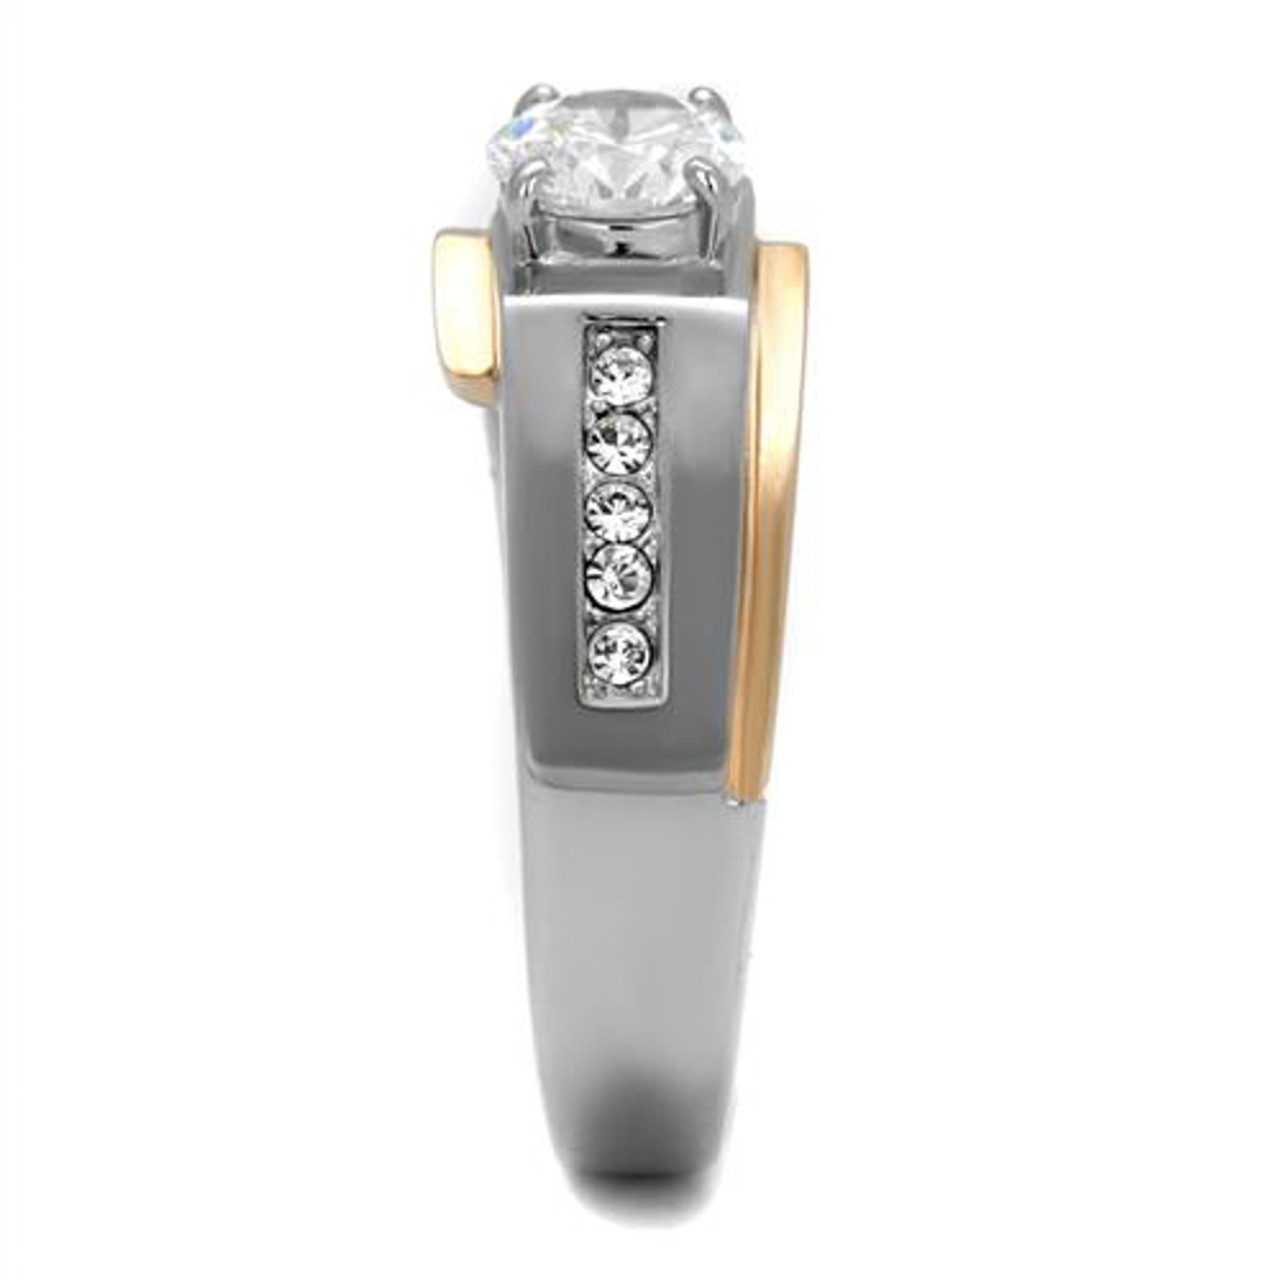 ARTK2310 Stainless Steel 14K Gold Plated Simulated Diamond Greek Key Ring  Men's Size 8-13 